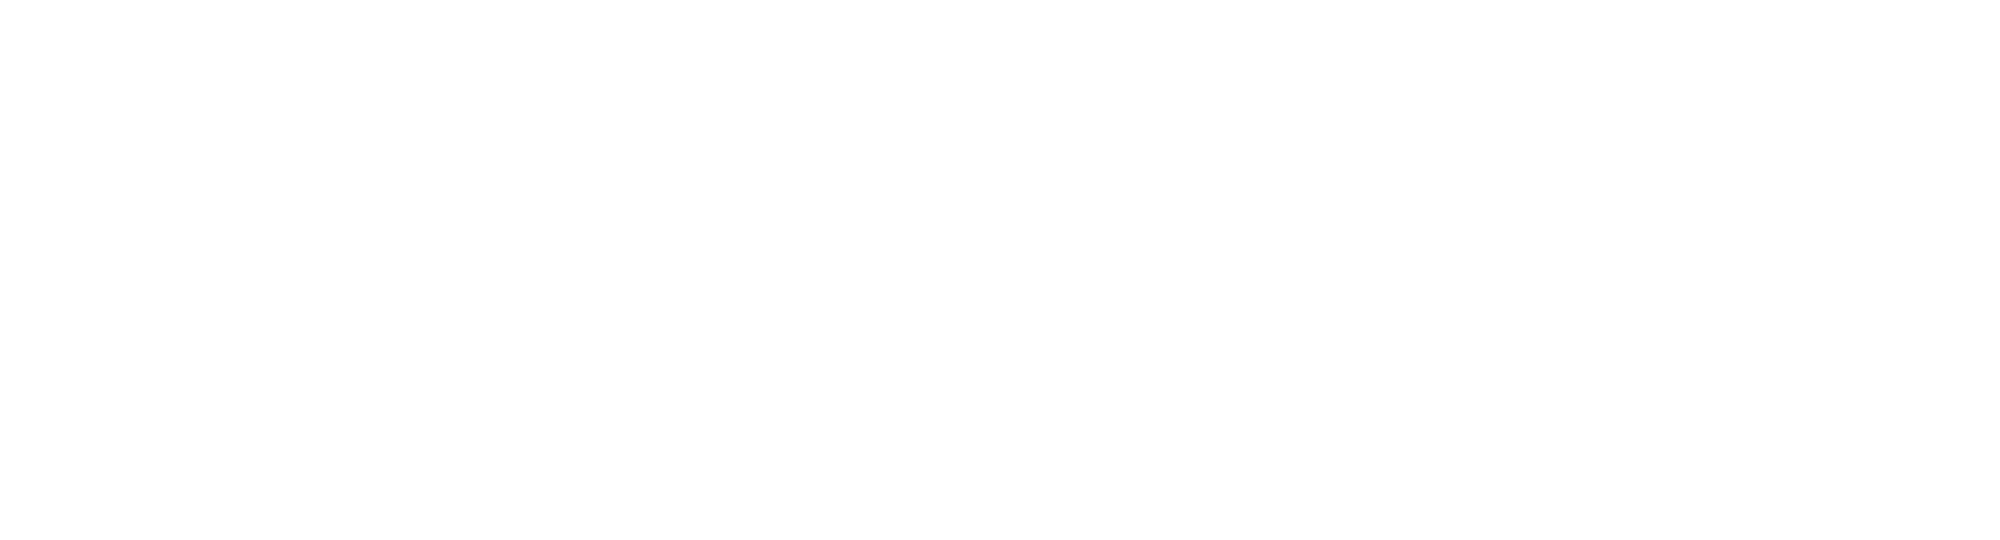 finnish red cross logo white